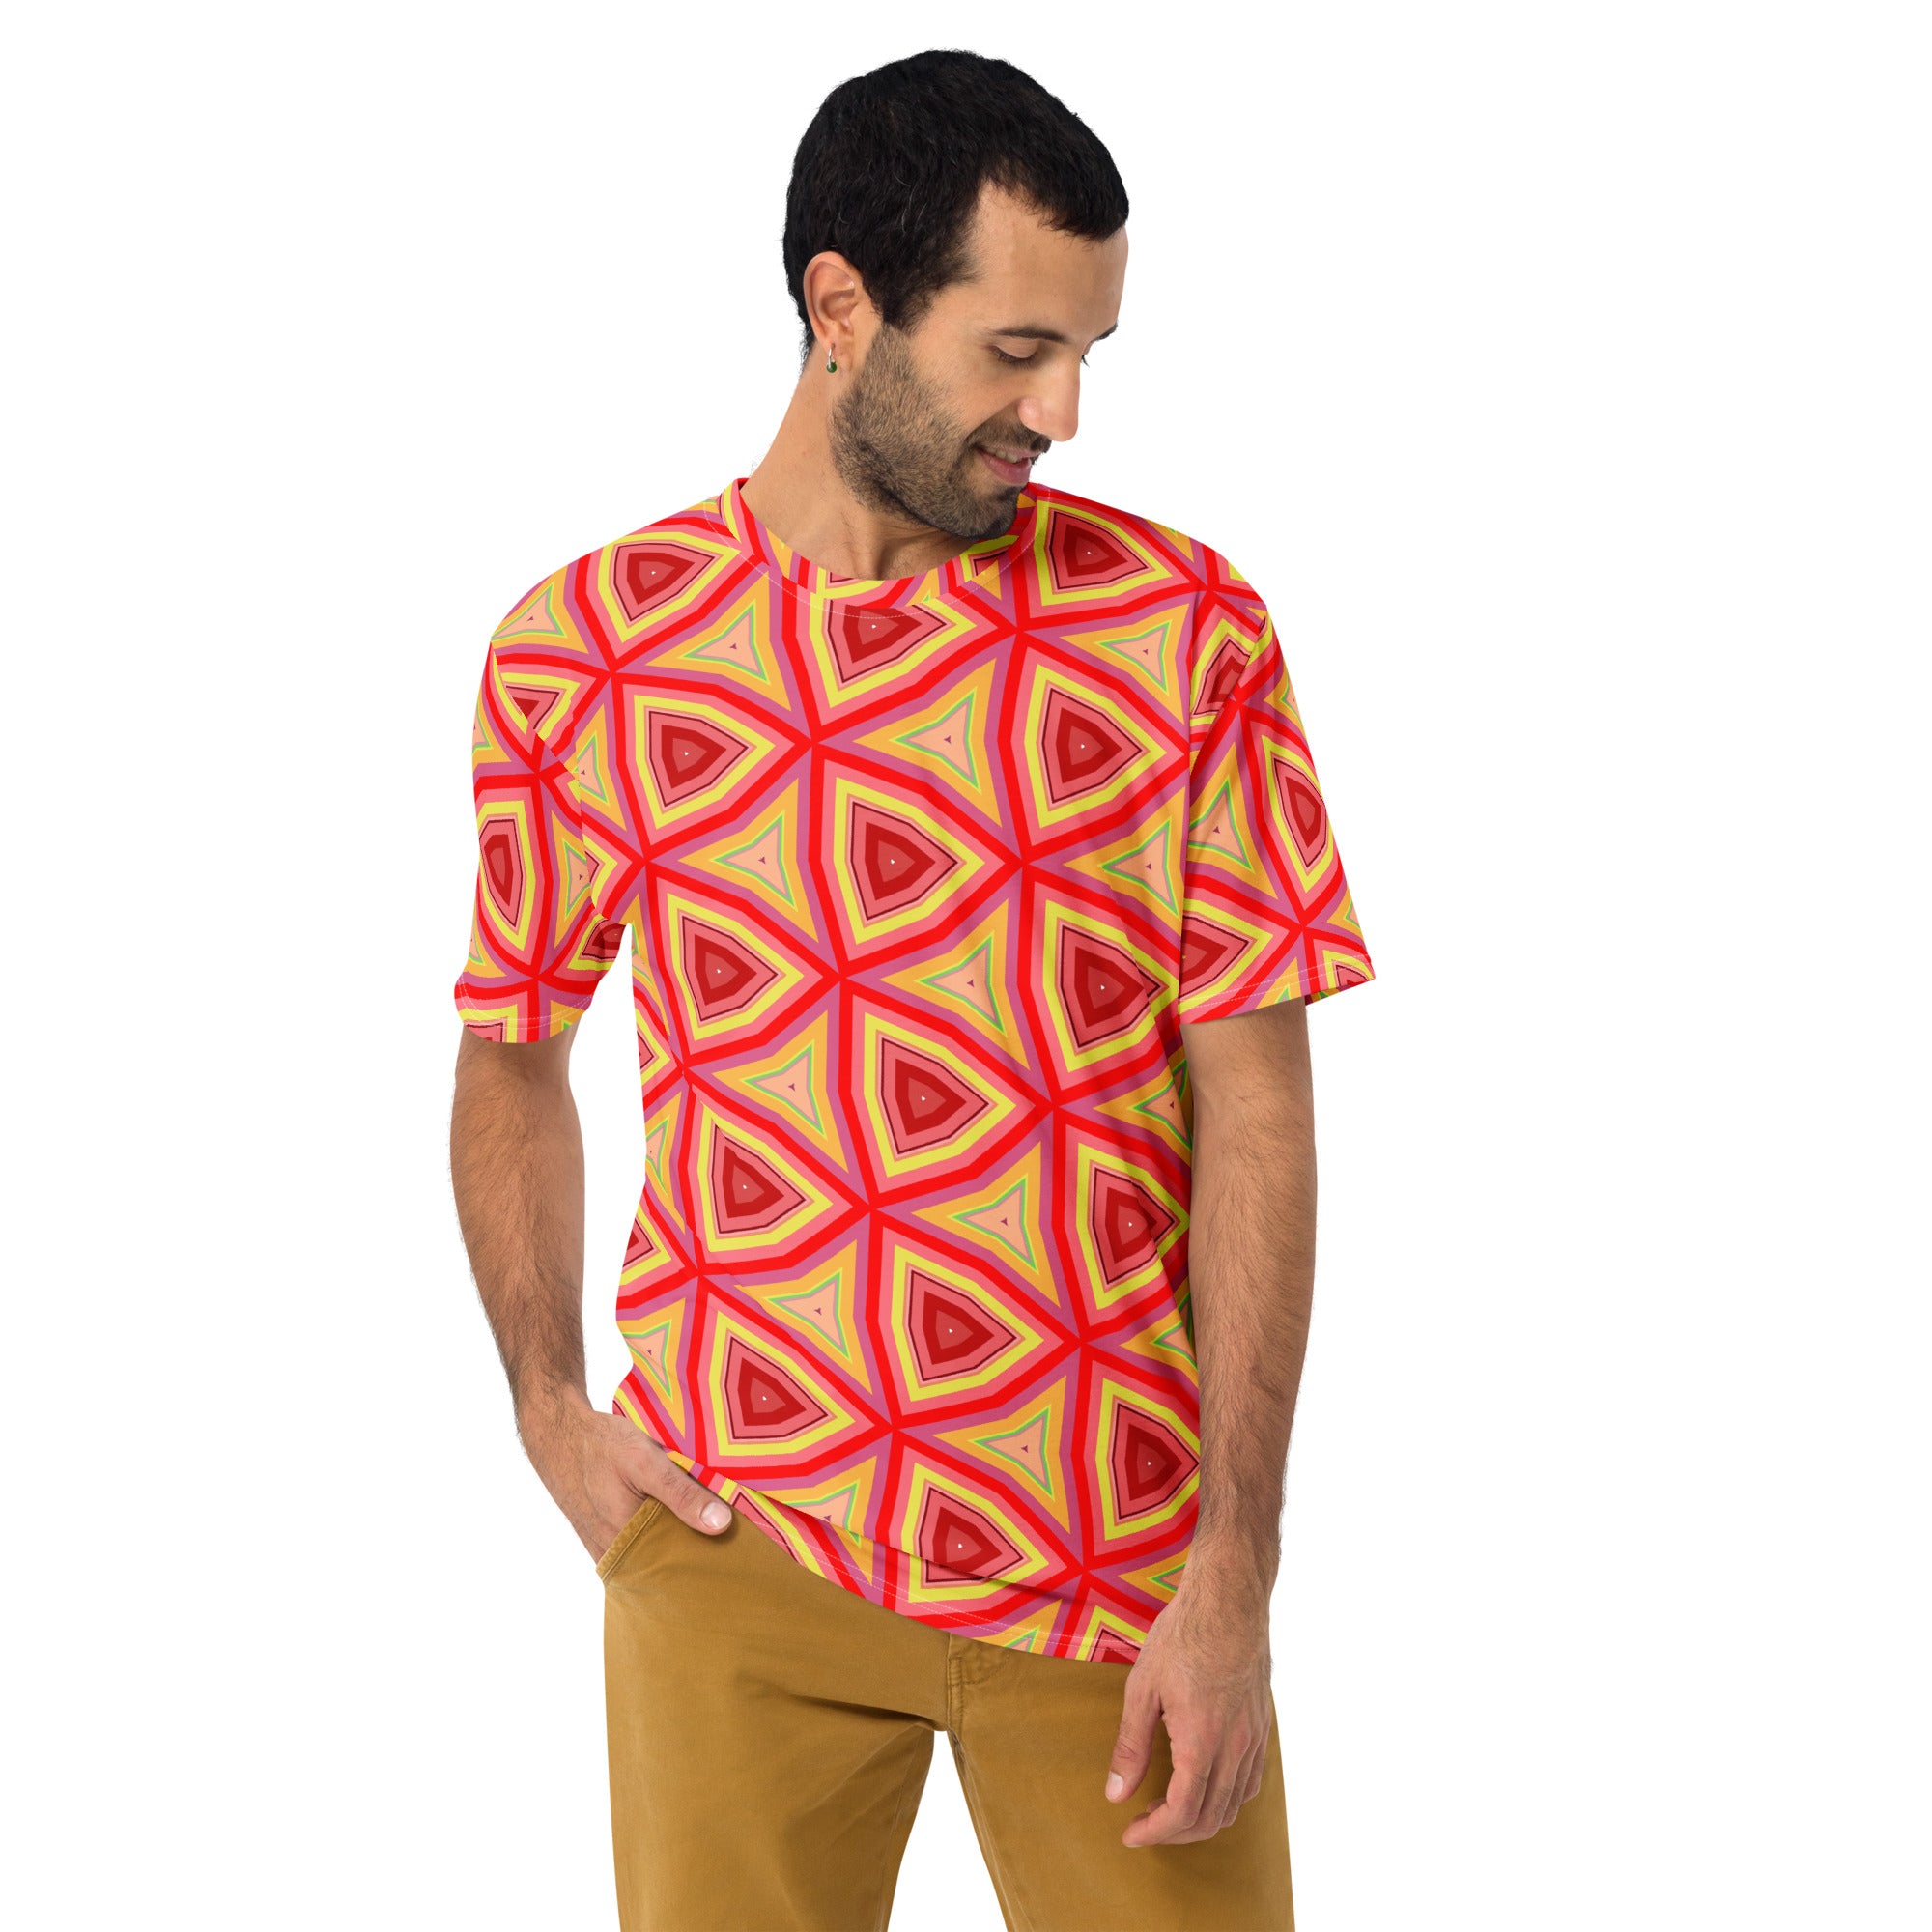 Fashionable Desert Mirage crewneck t-shirt for men with desert print